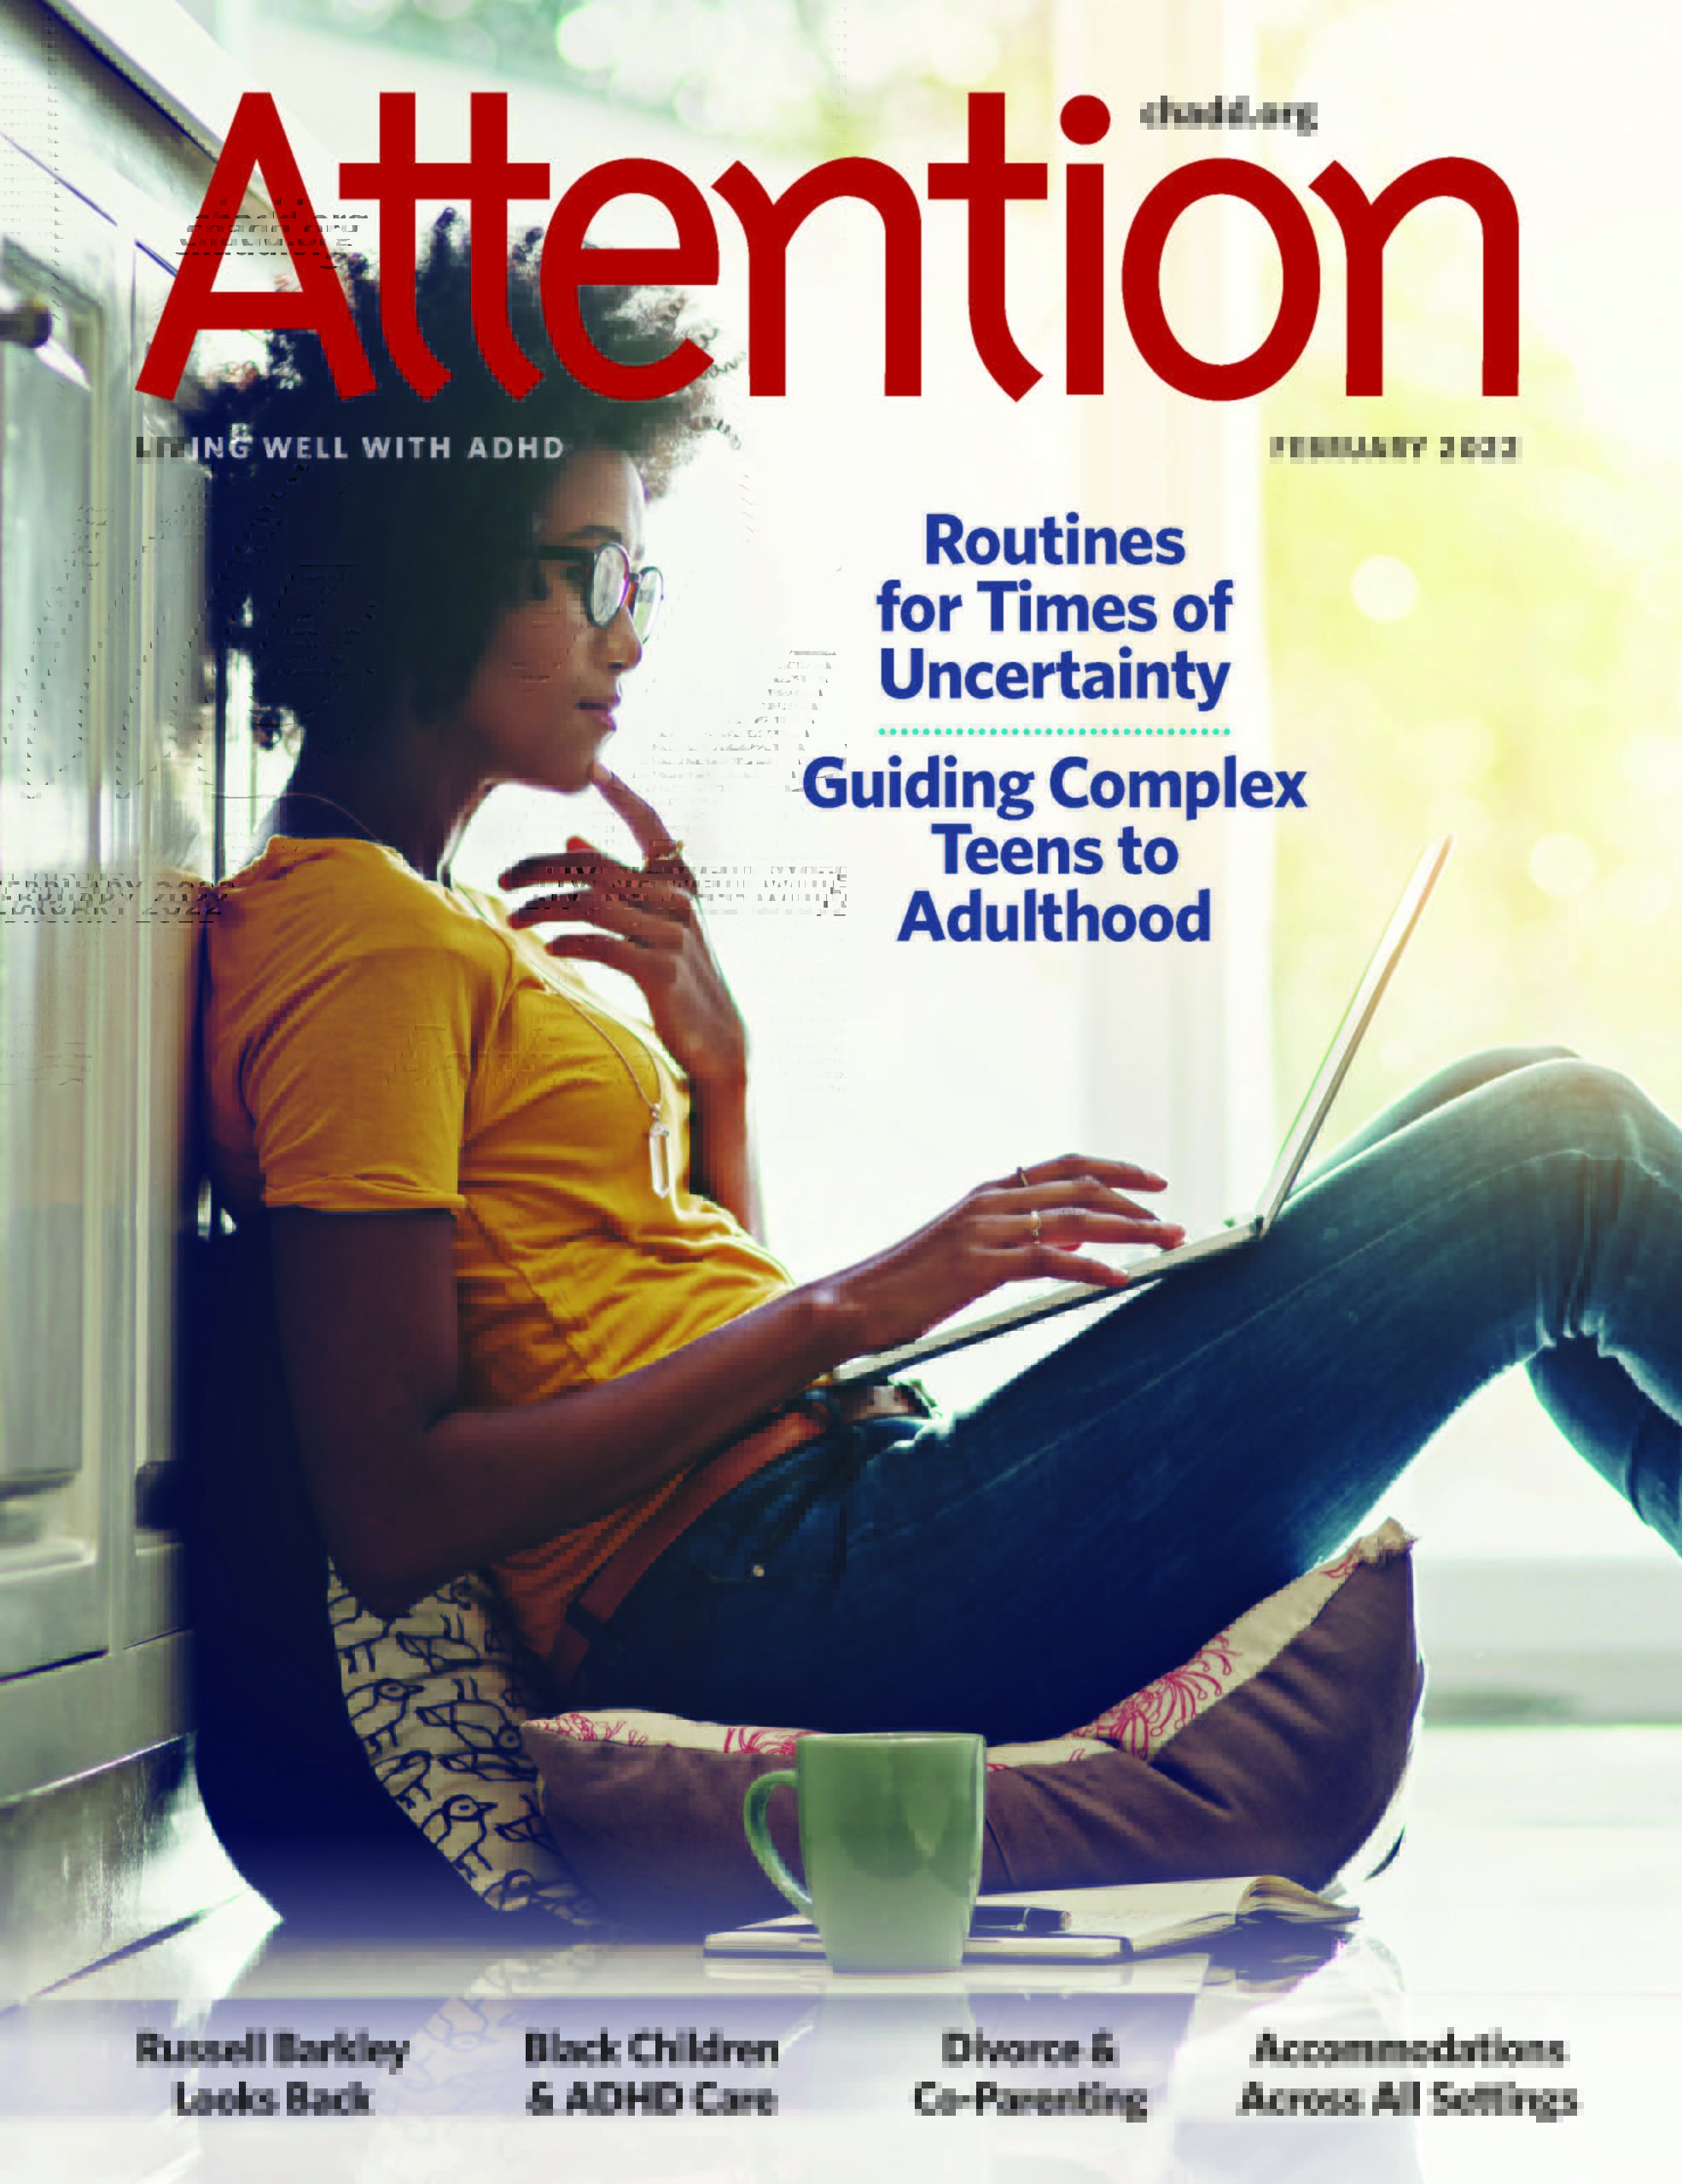 Attention Magazine February 2022